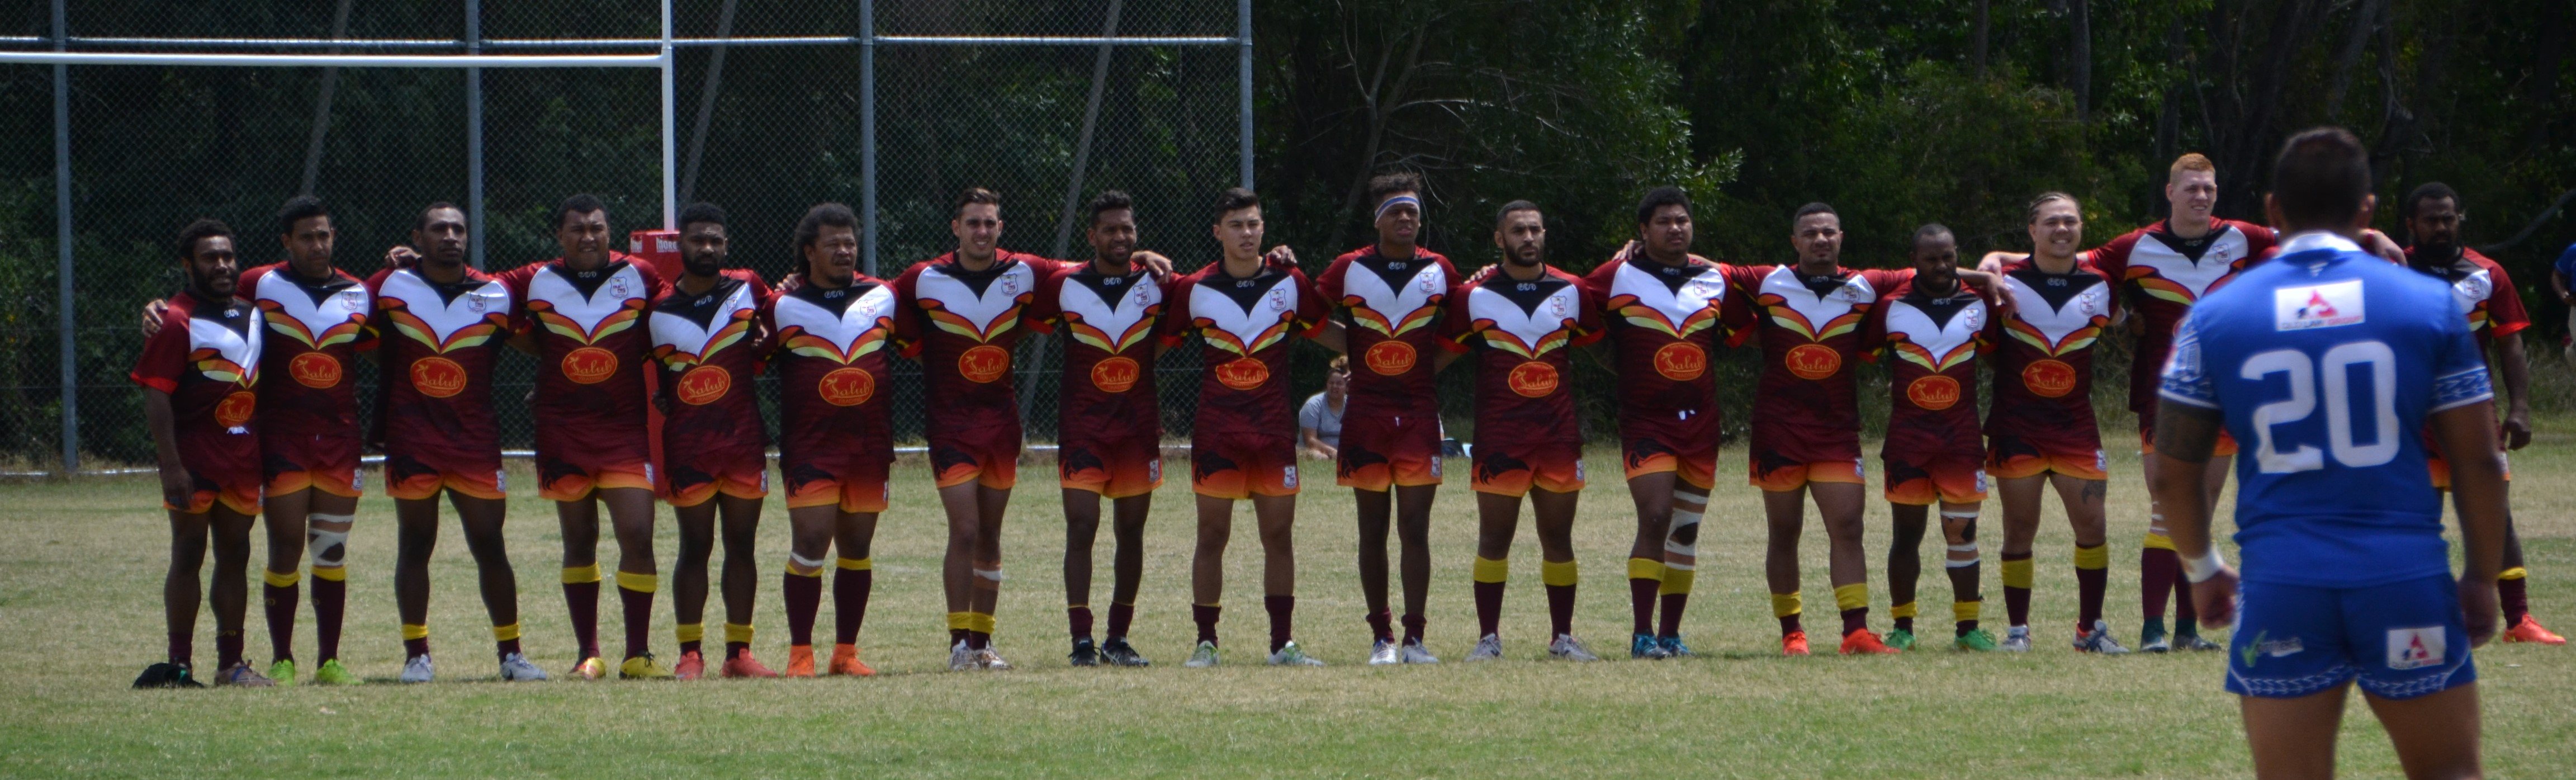 QLD PNG Rugby League Representative Team & Development Program